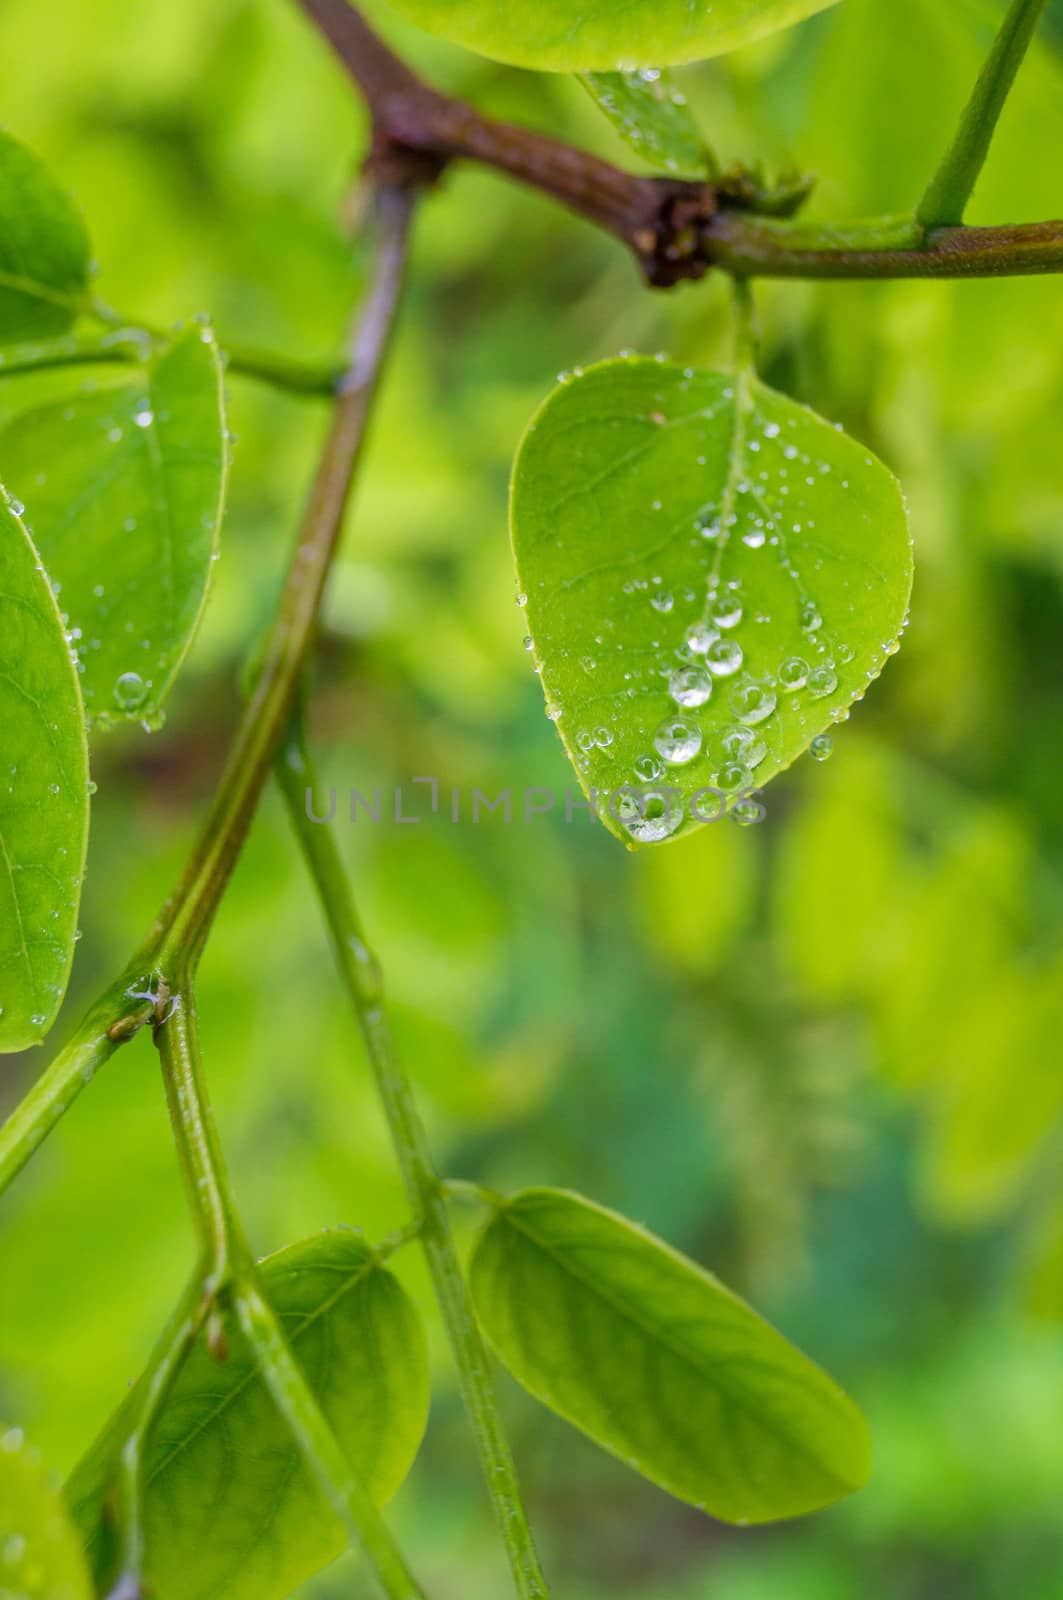 Water drops on a leaf by bignoub